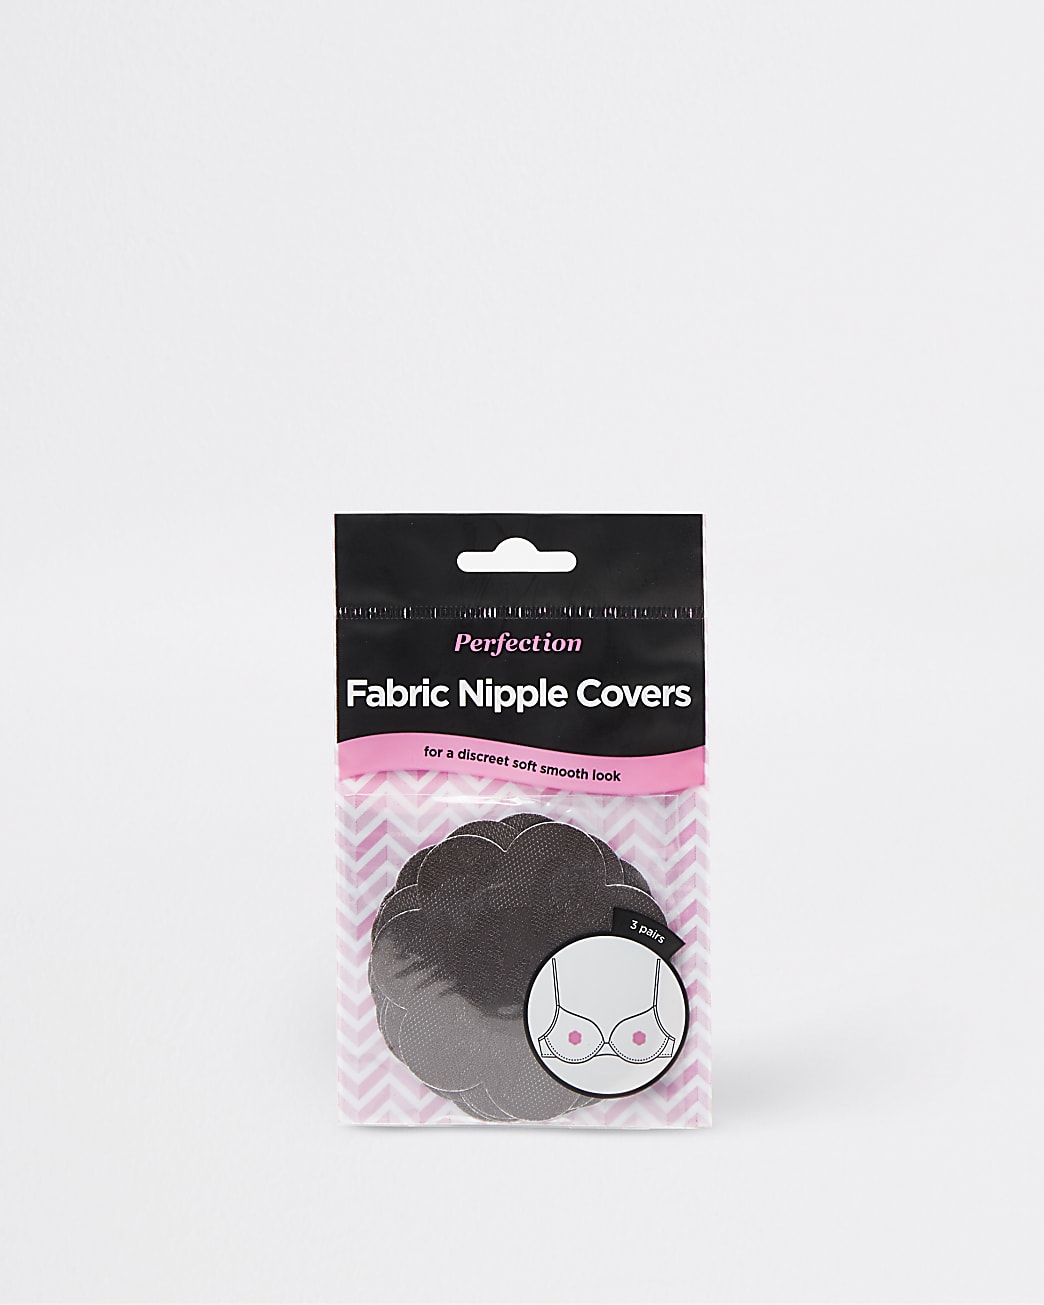 Dark brown silicone fabric nipple covers